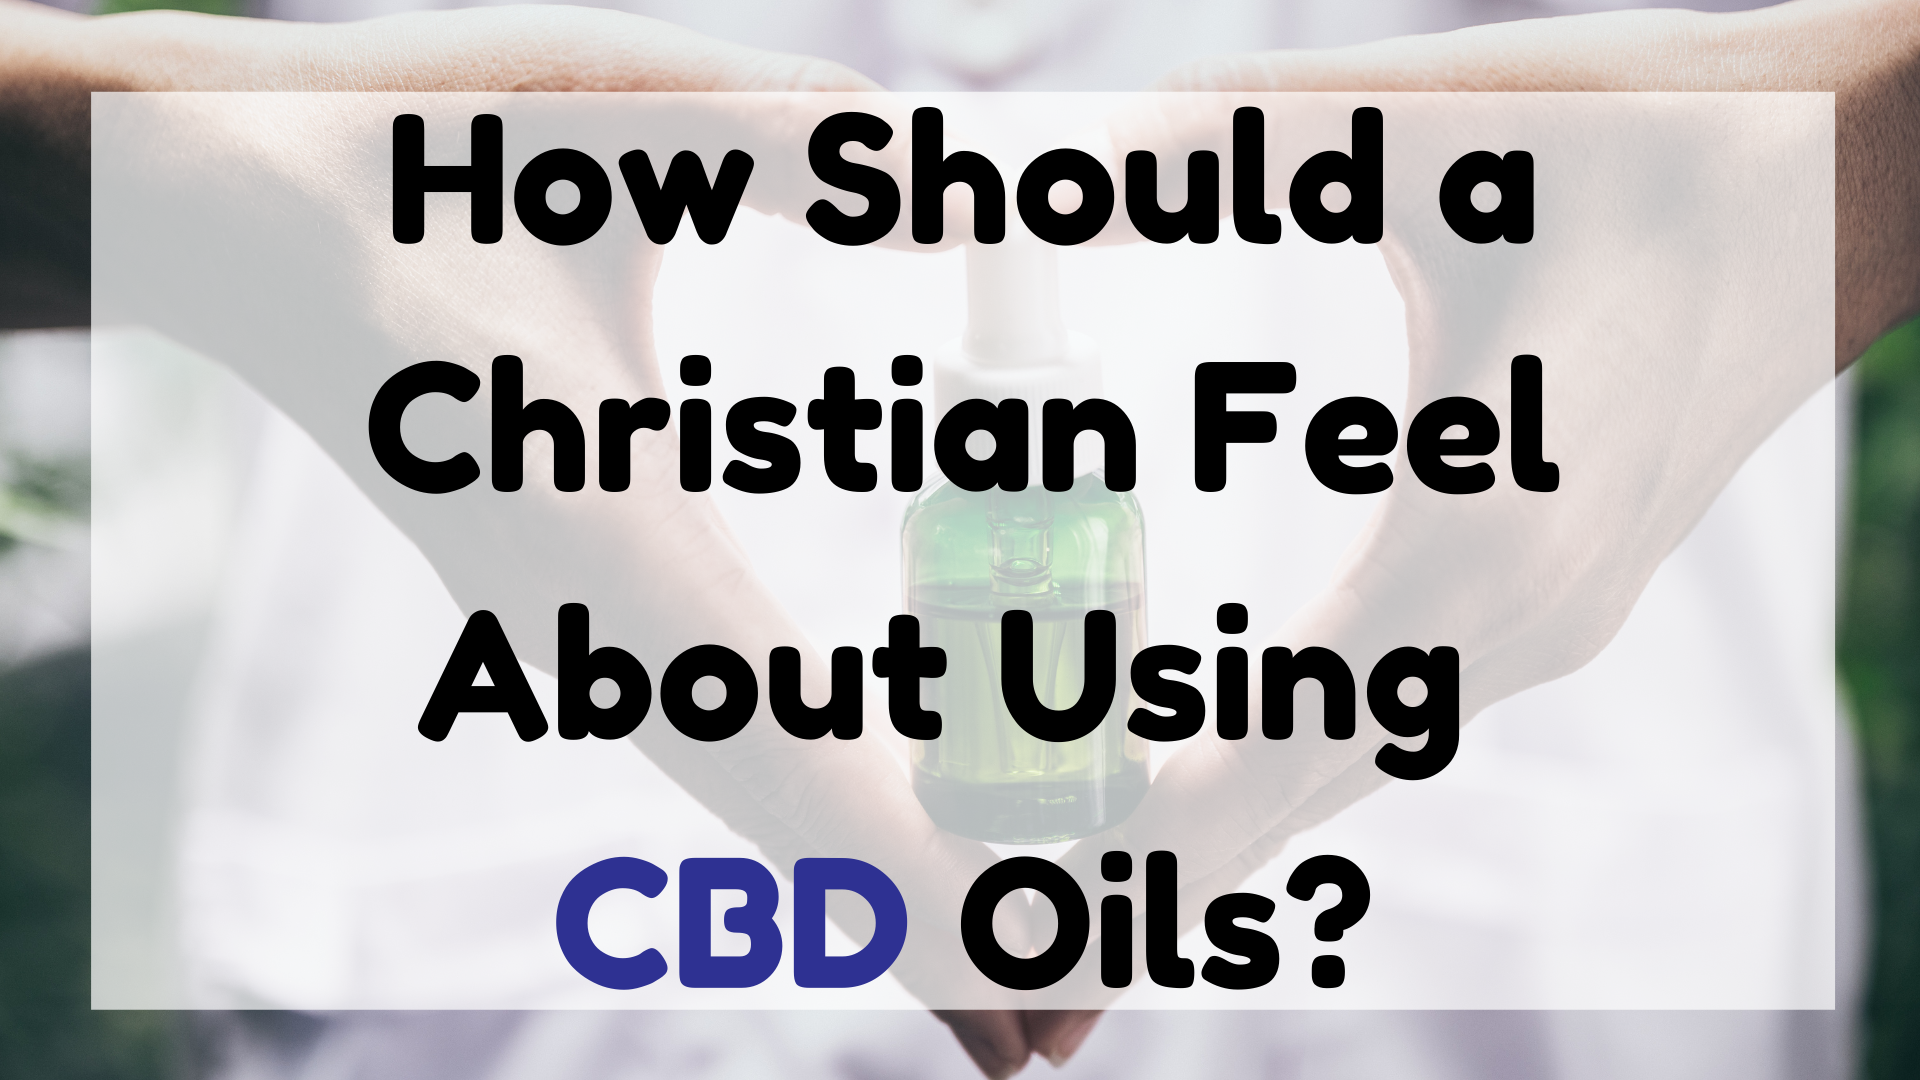 A Christian Feel About Using CBD Oils